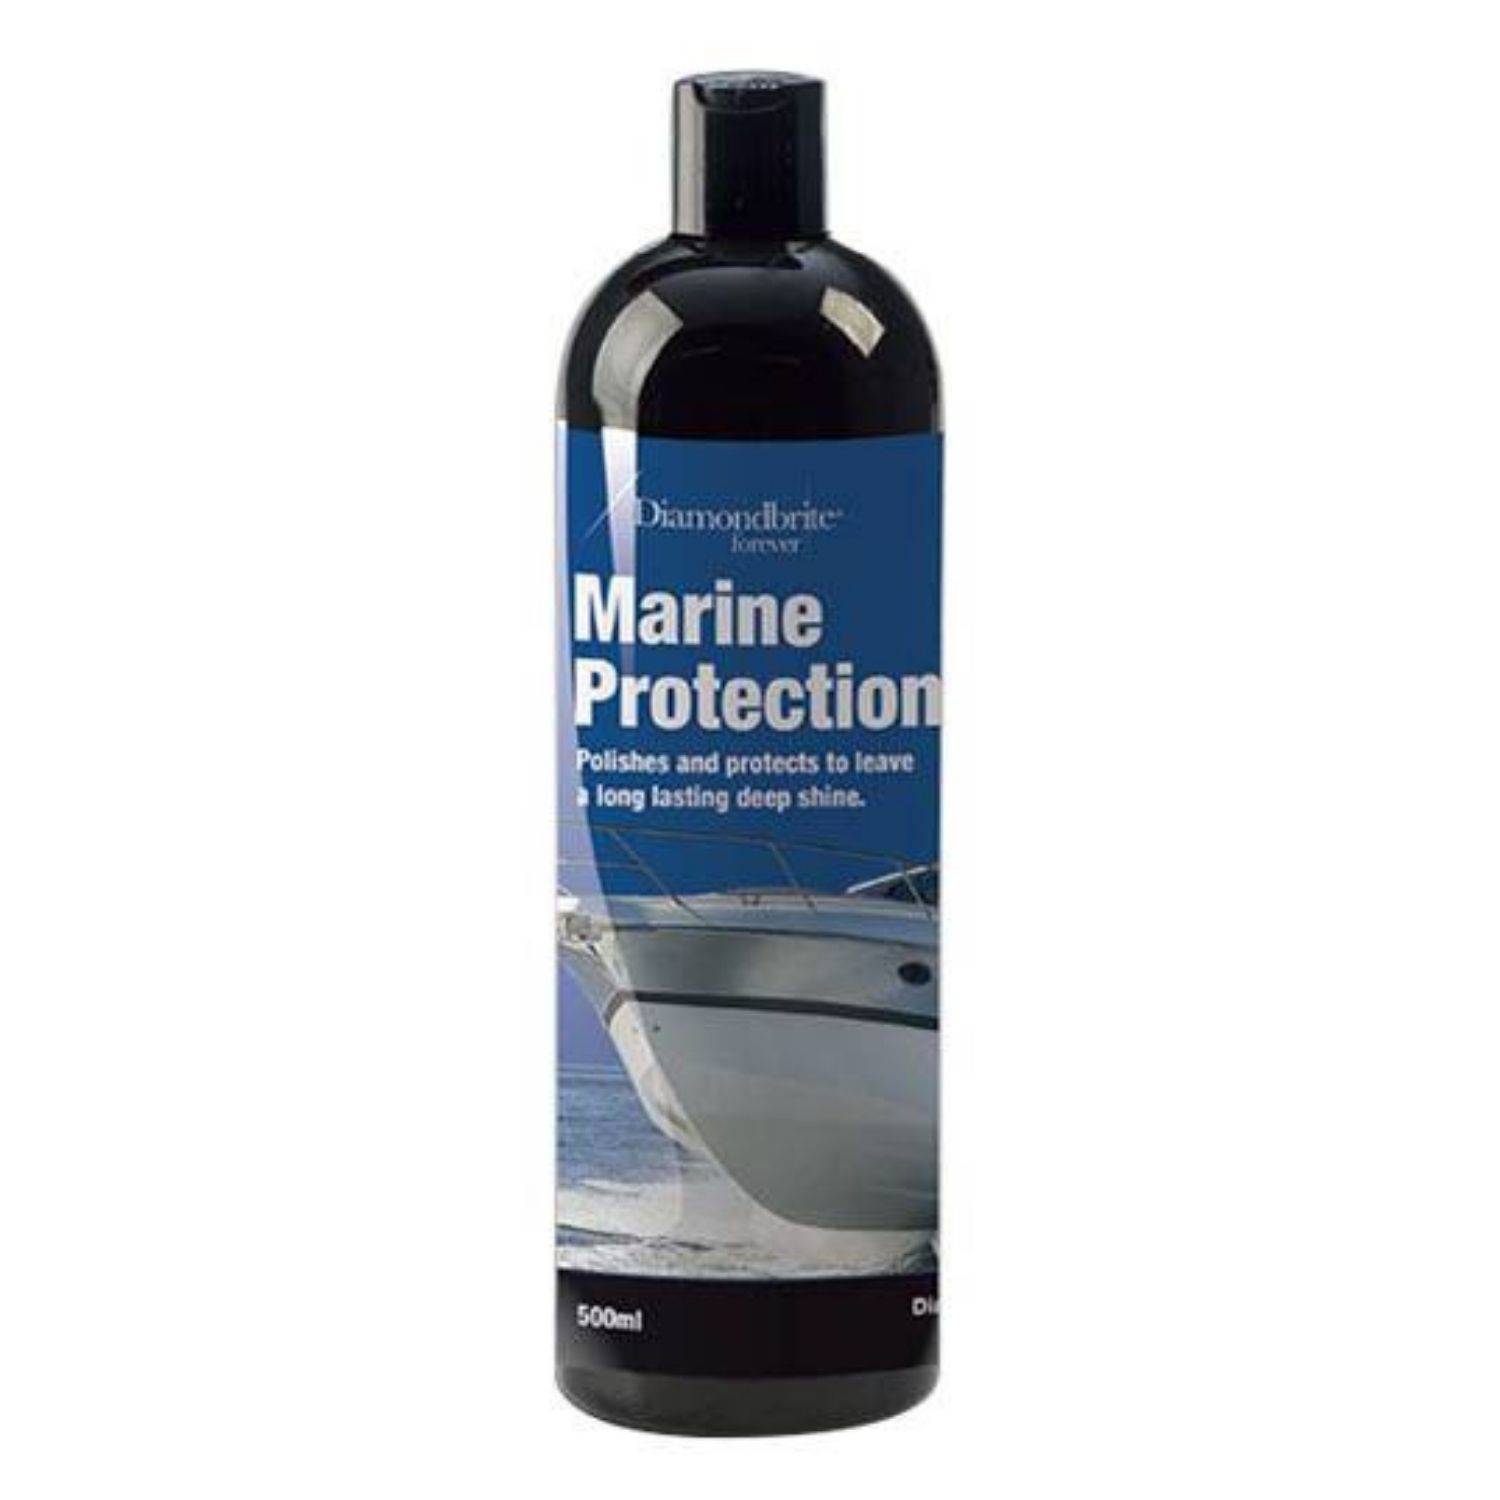 Diamondbrite marine protection2